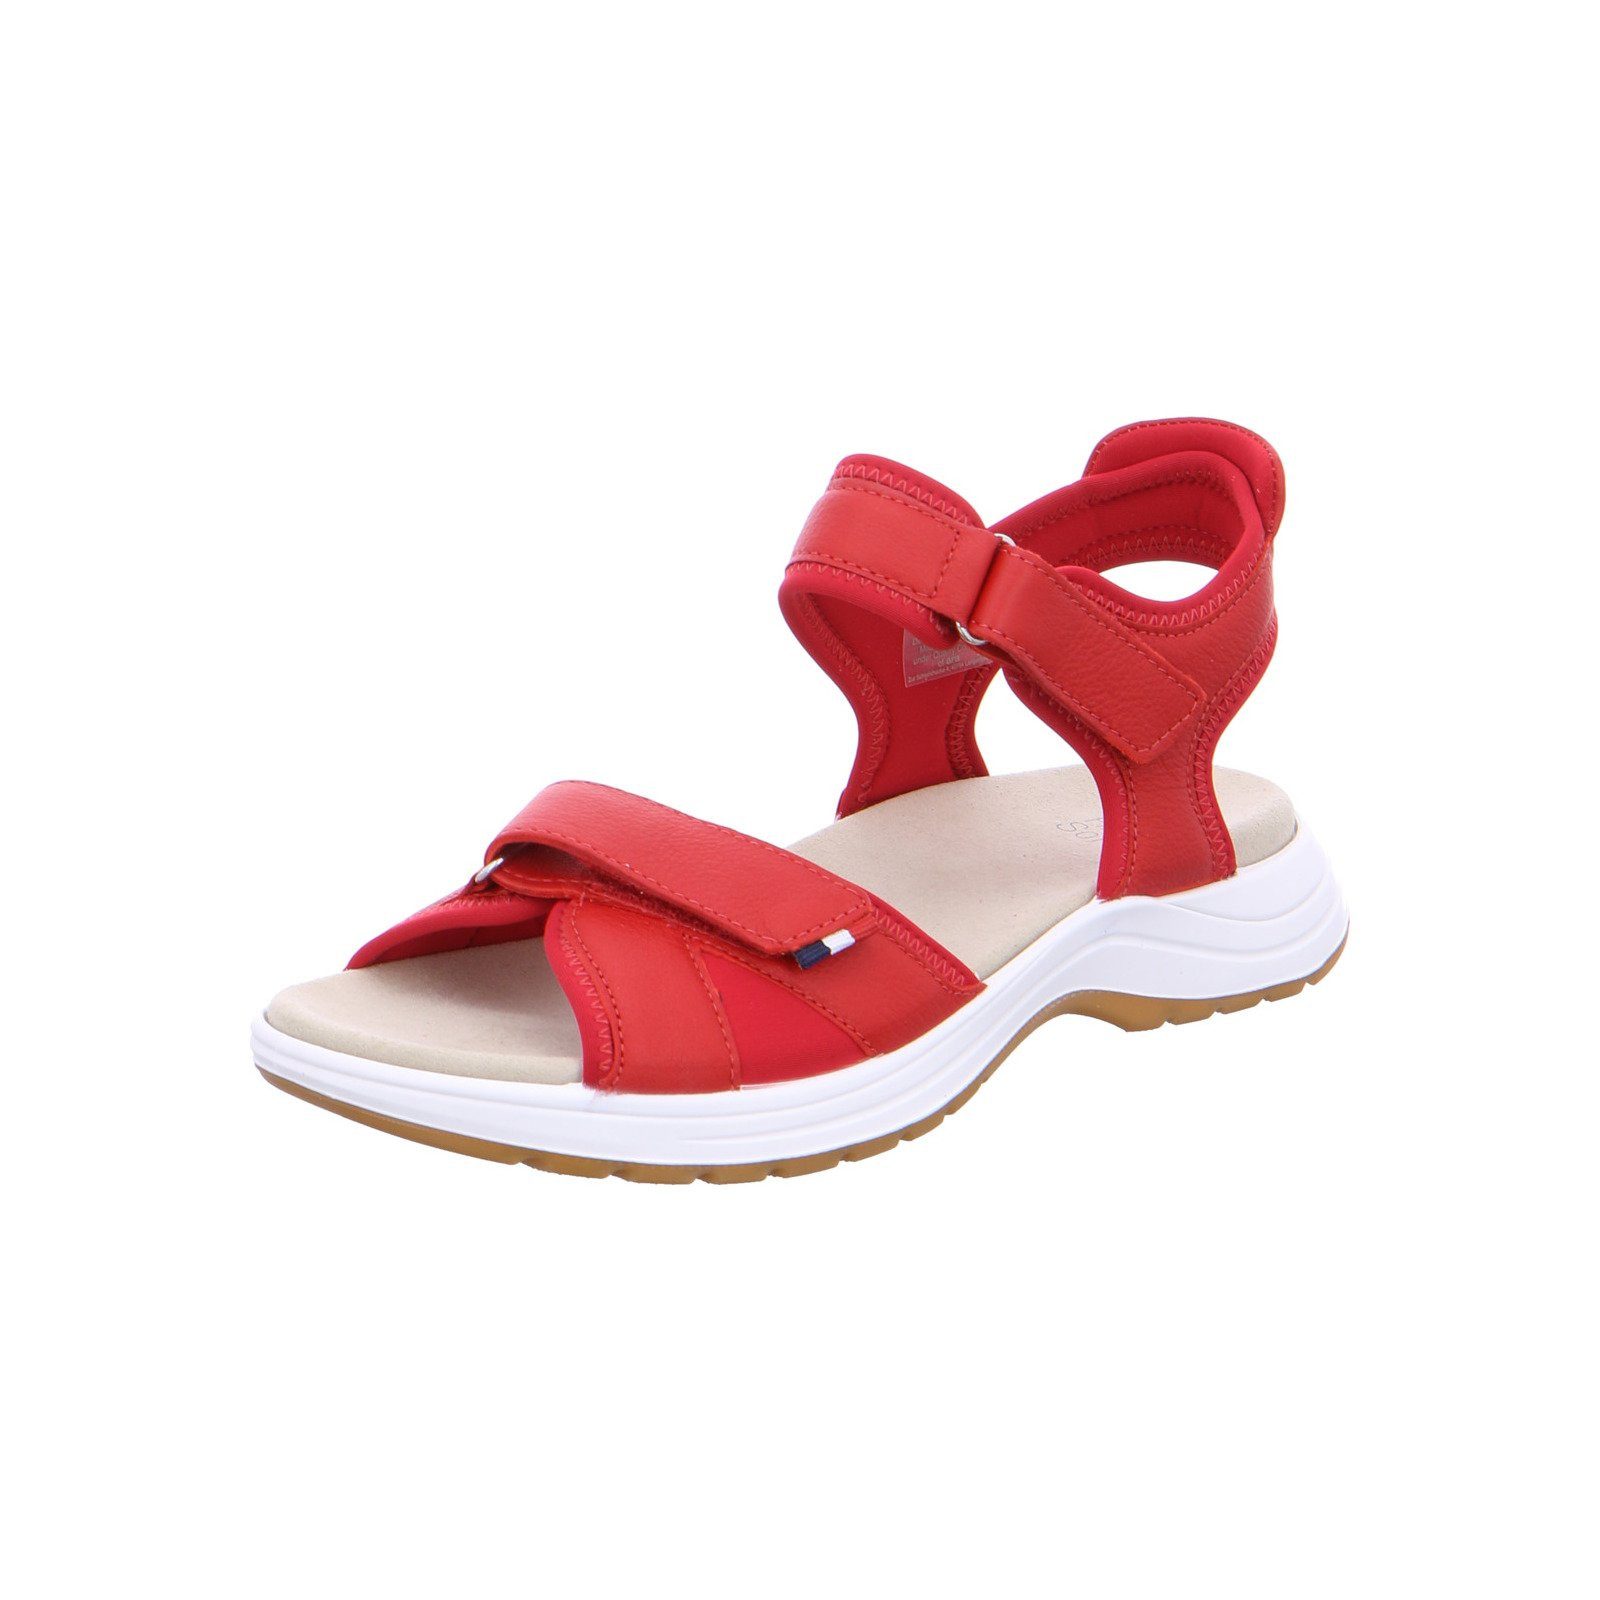 Ara Panama - Damen Schuhe Sandalette rot